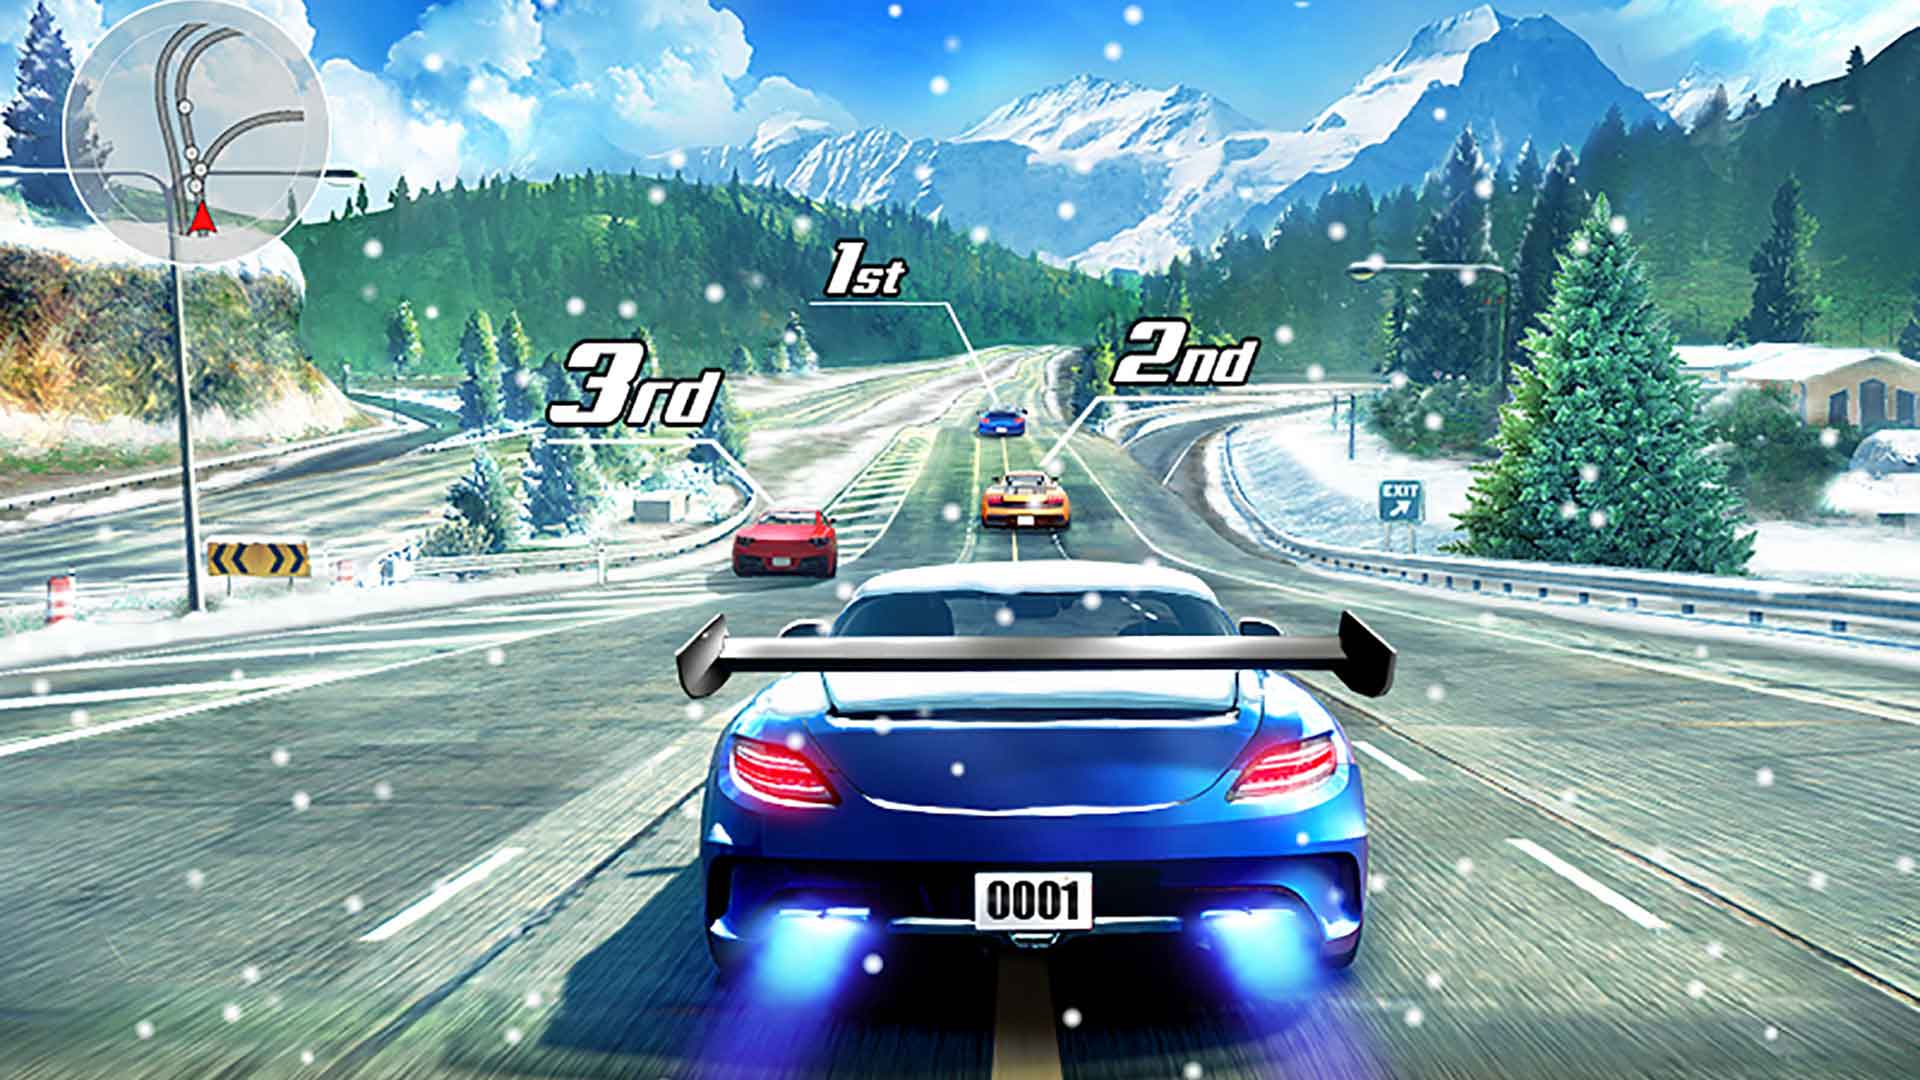 Play Street Racing 3D Online